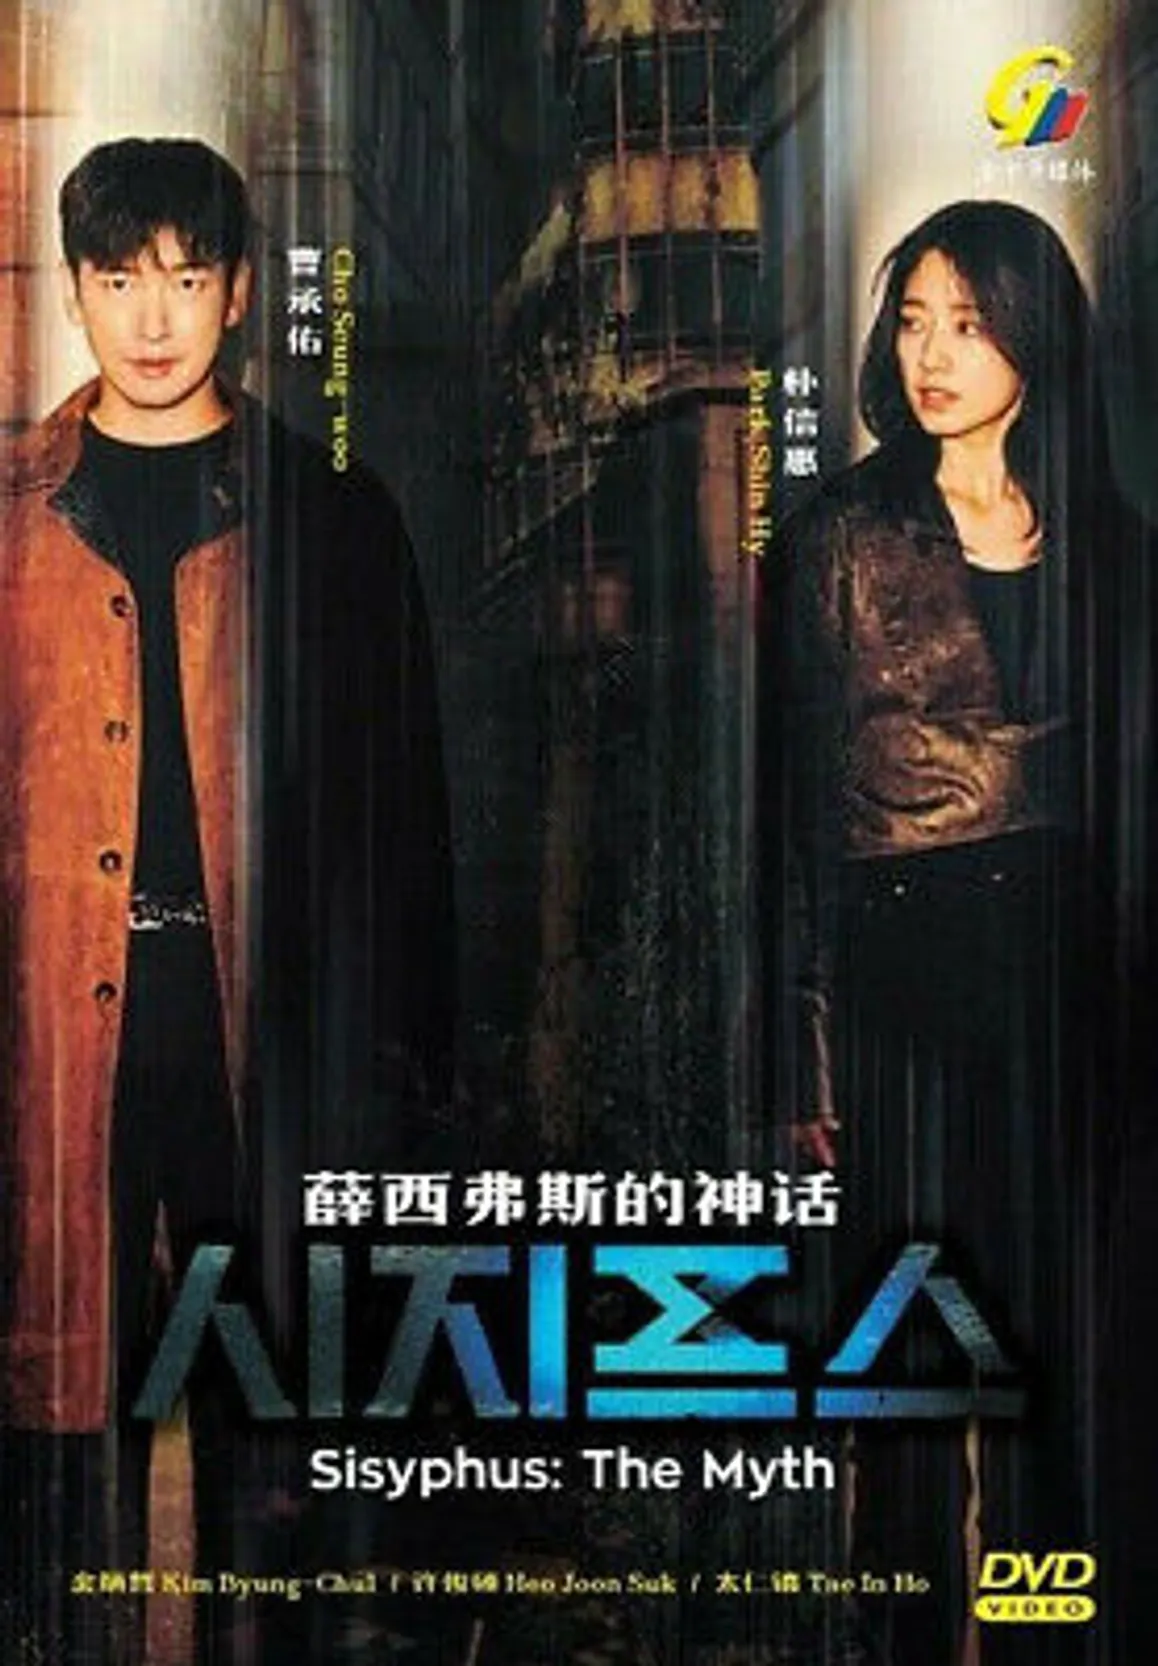 DVD Korean Drama Sisyphus: The Myth (VOL.1 - 16End) English Subtitle All  Region | eBay